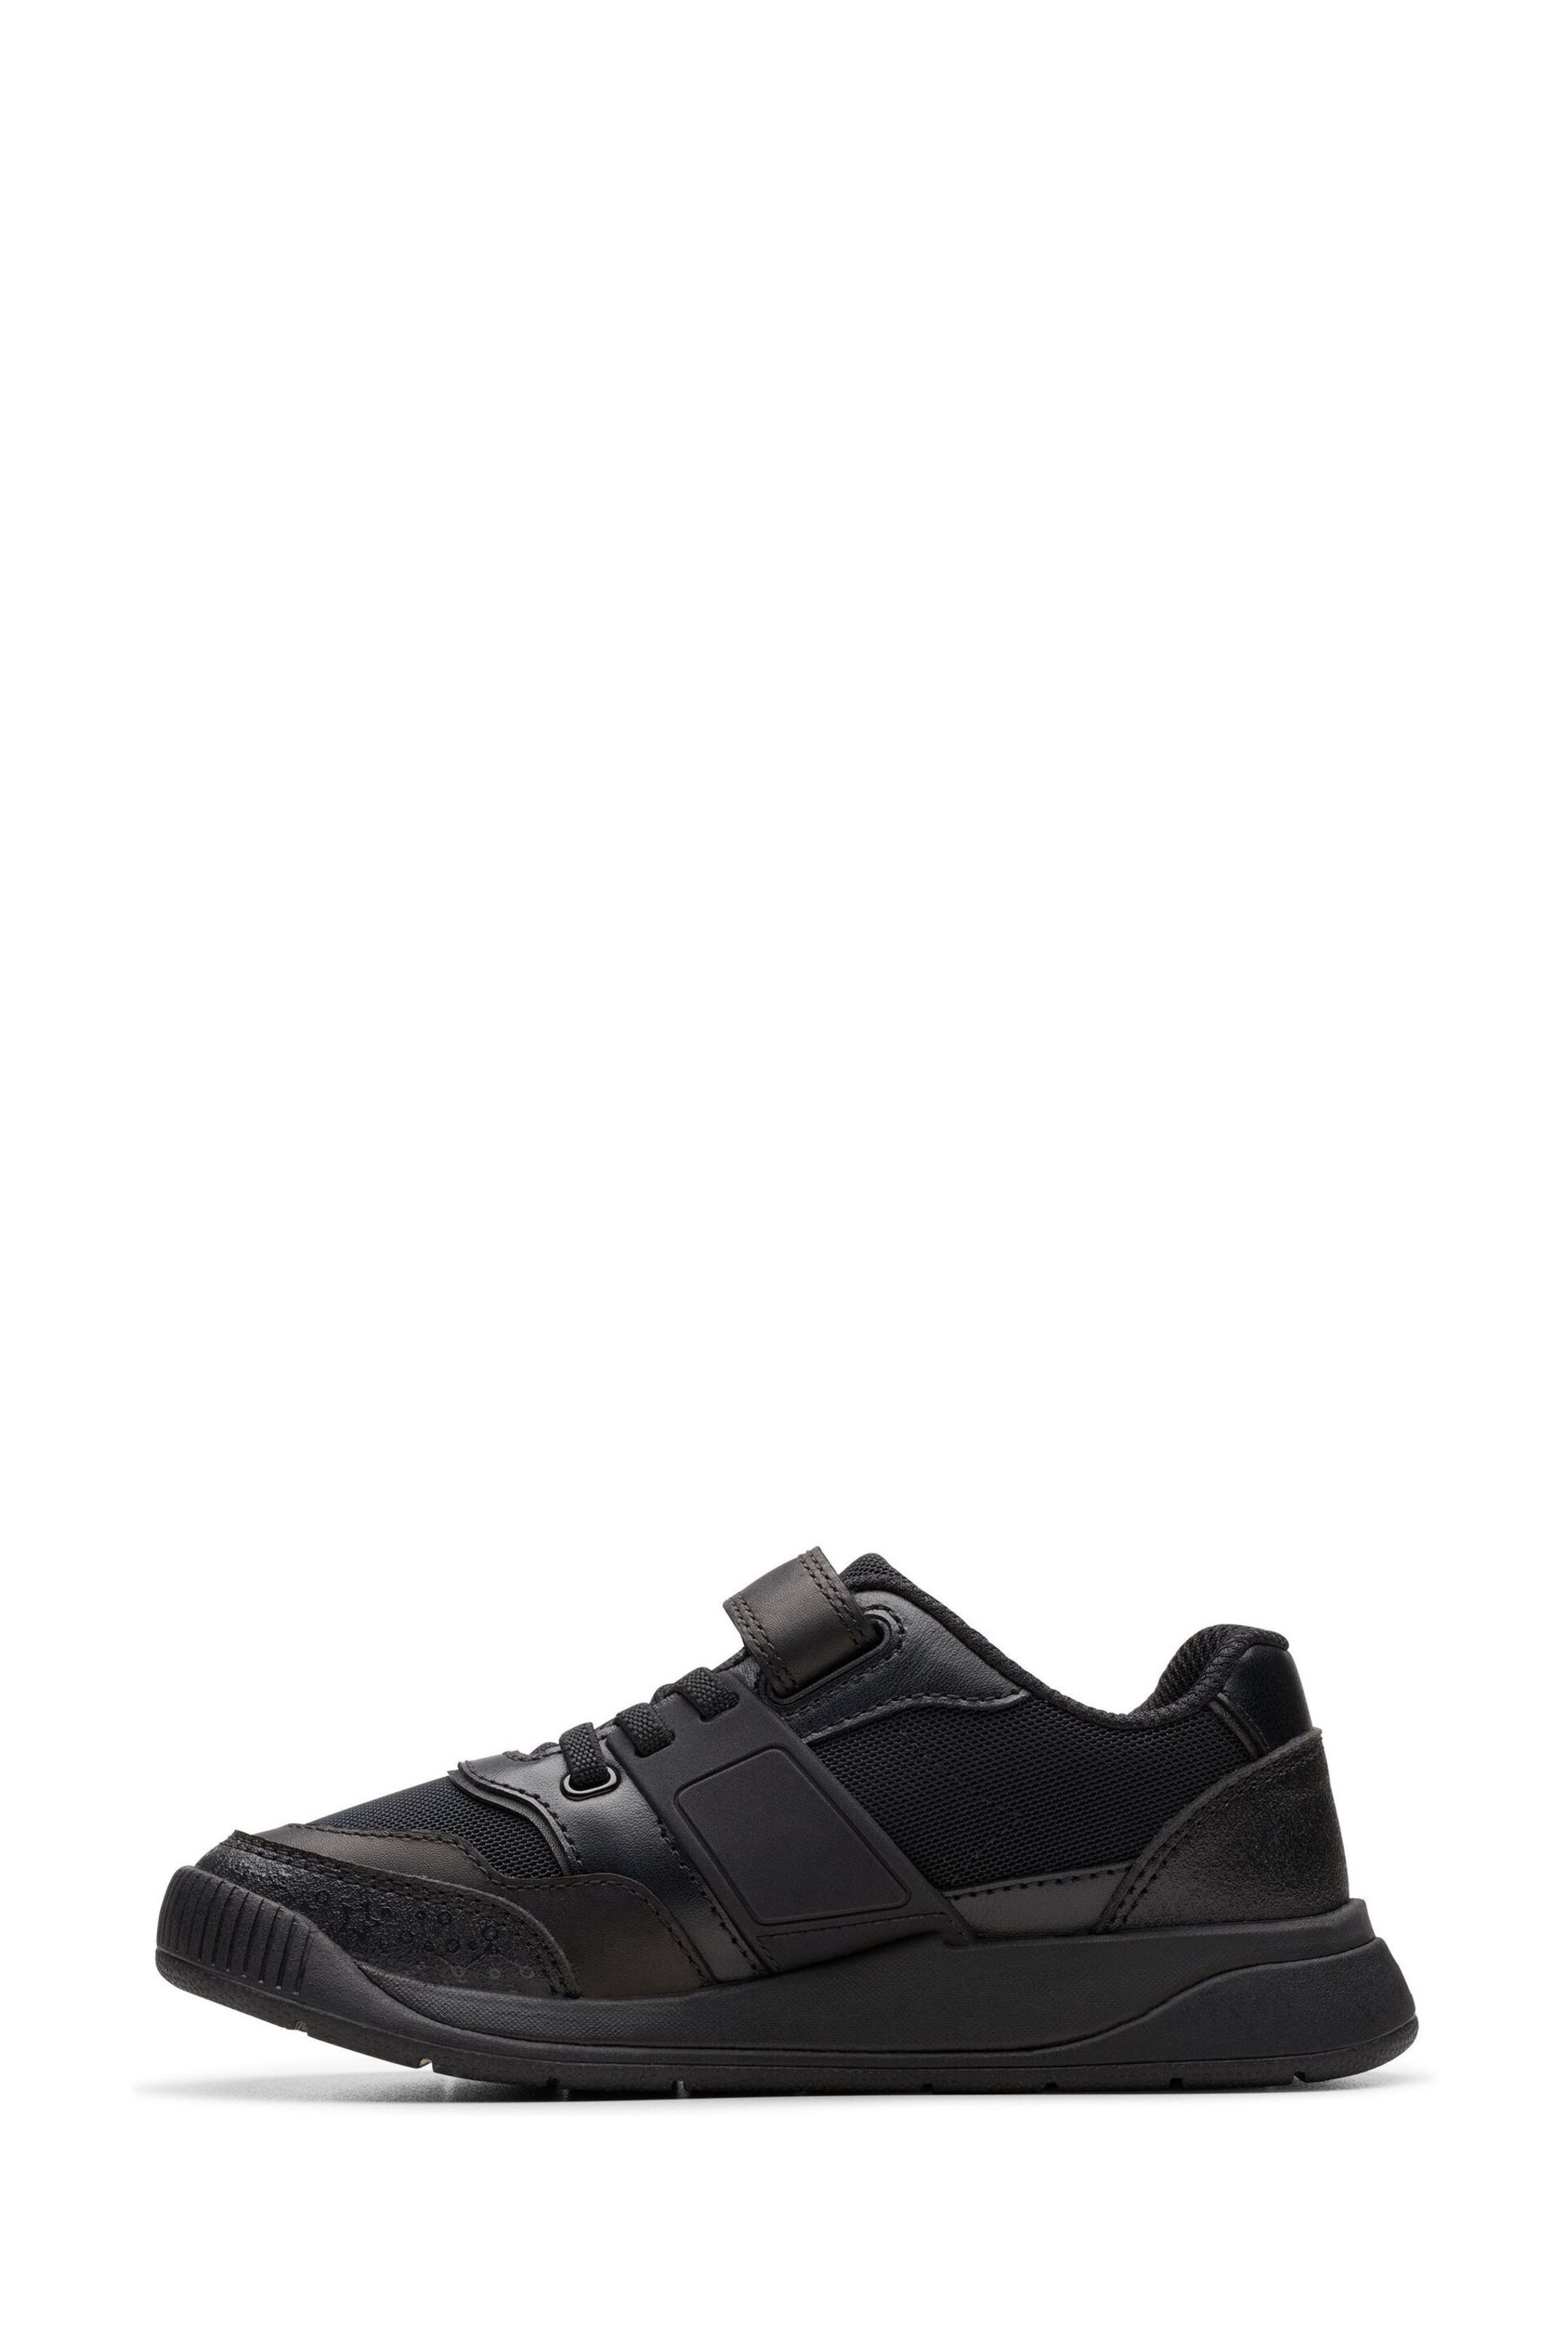 Clarks Black Wide Fit (G) Lune Flex Shoes - Image 2 of 4